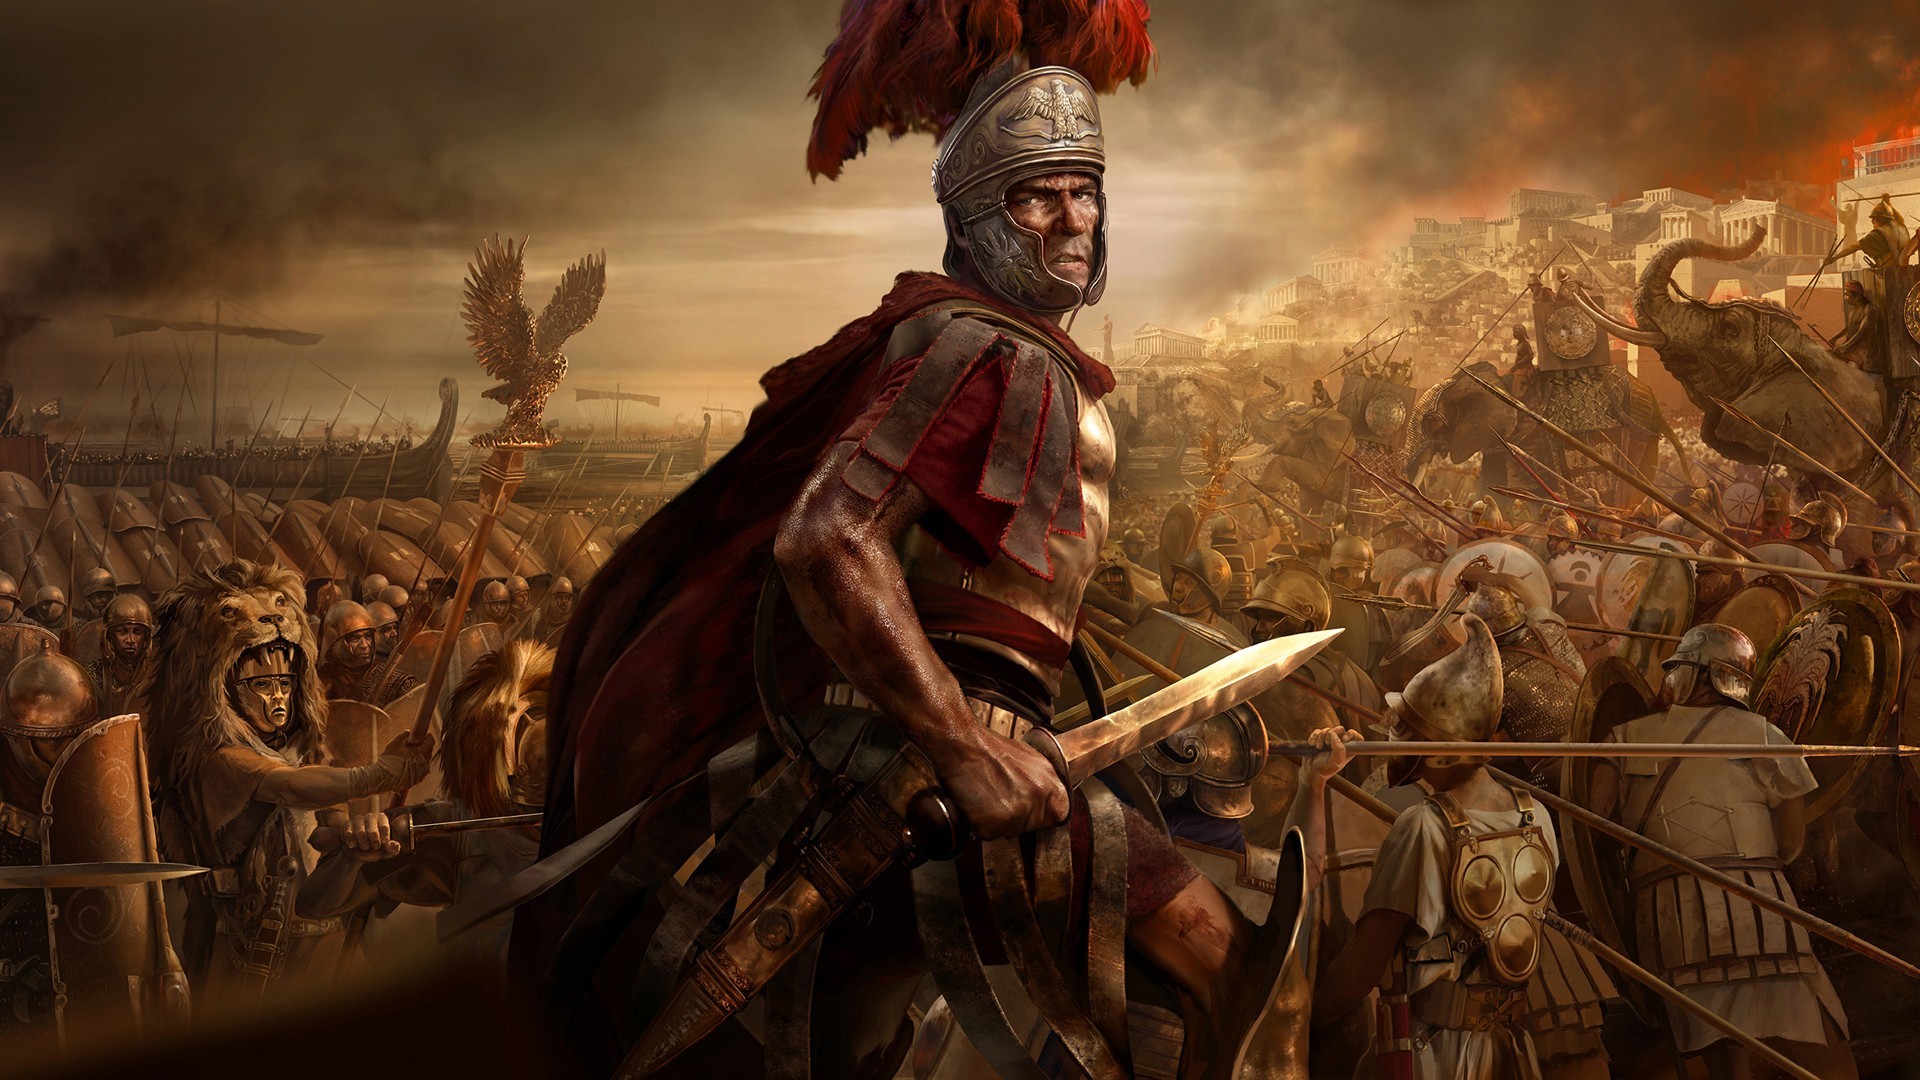 Rome 2 Roman Soldier Sword warrior warriors fantasy battle wallpaper